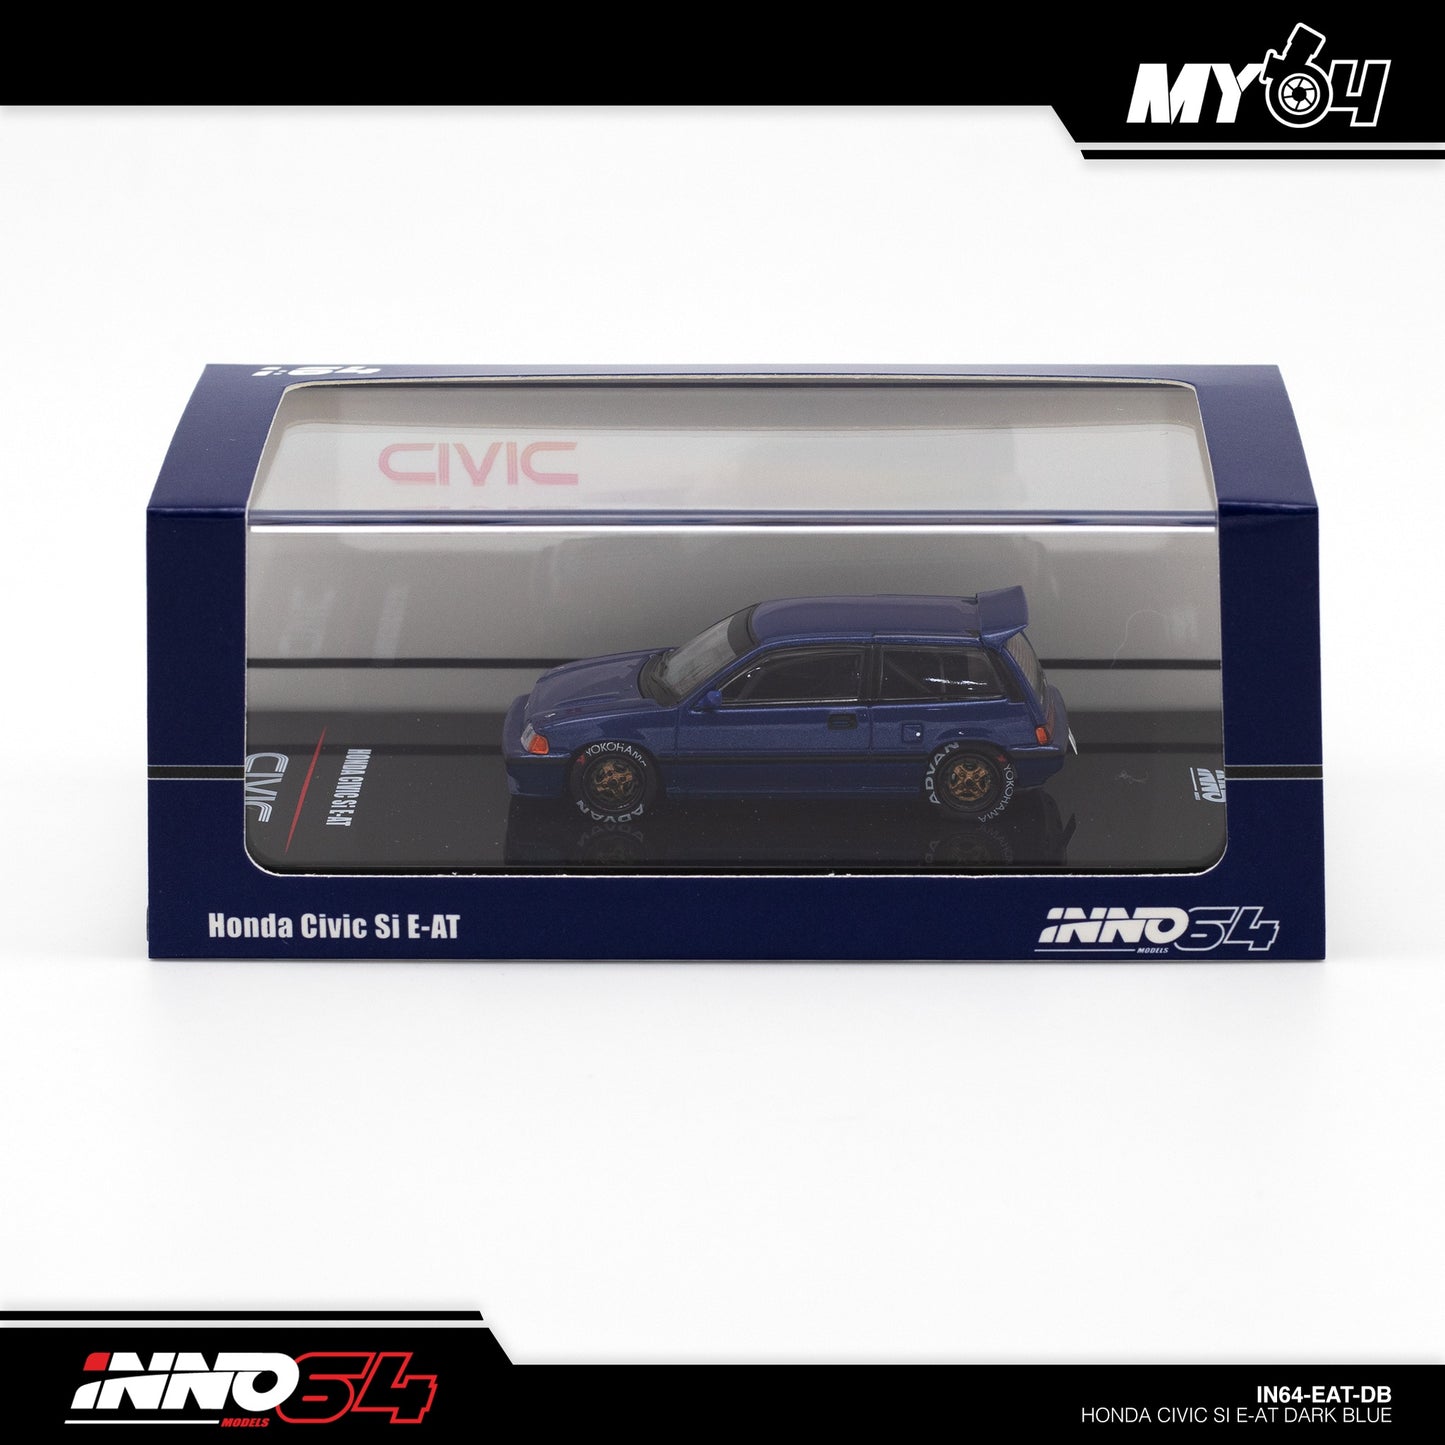 [INNO64] Honda Civic Si E-AT - Dark Blue